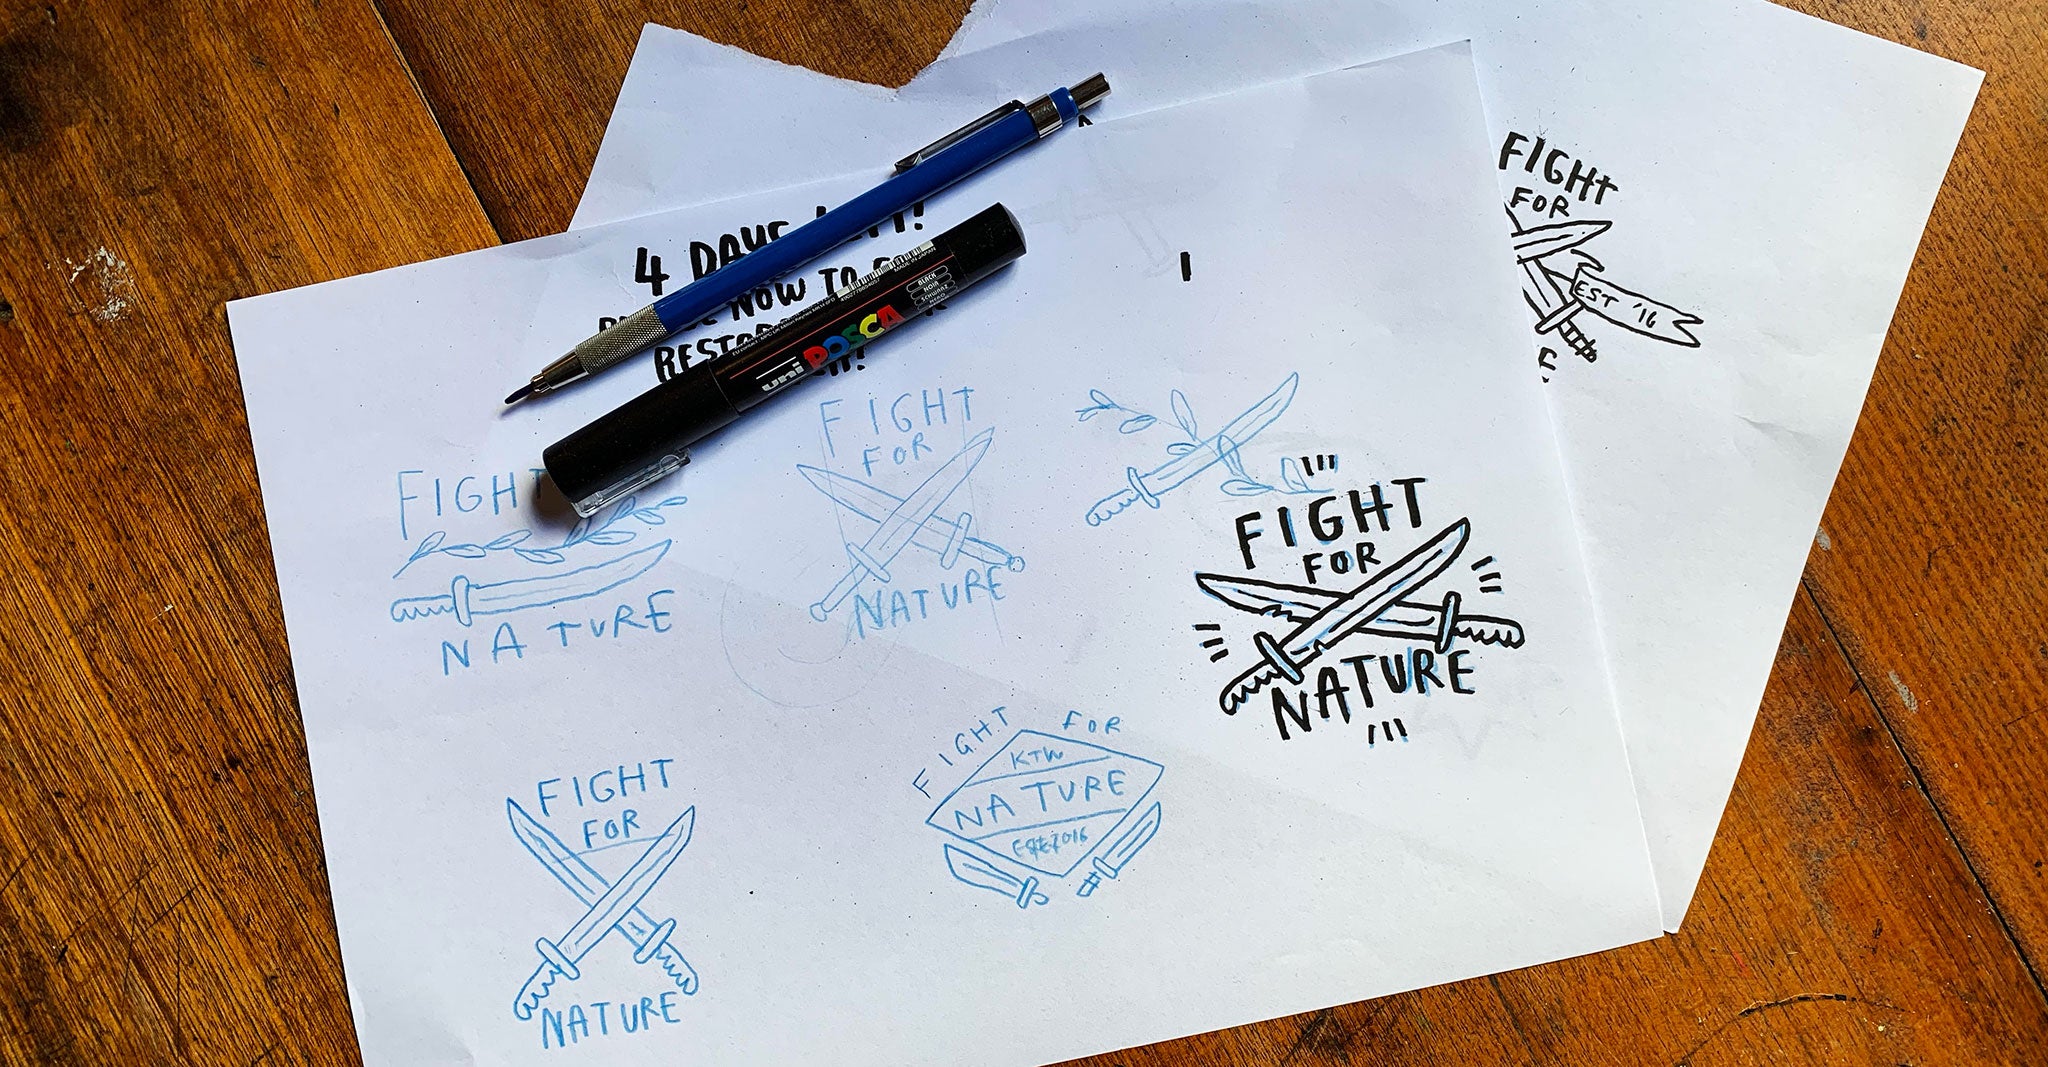 Original Fight for Nature design sketches